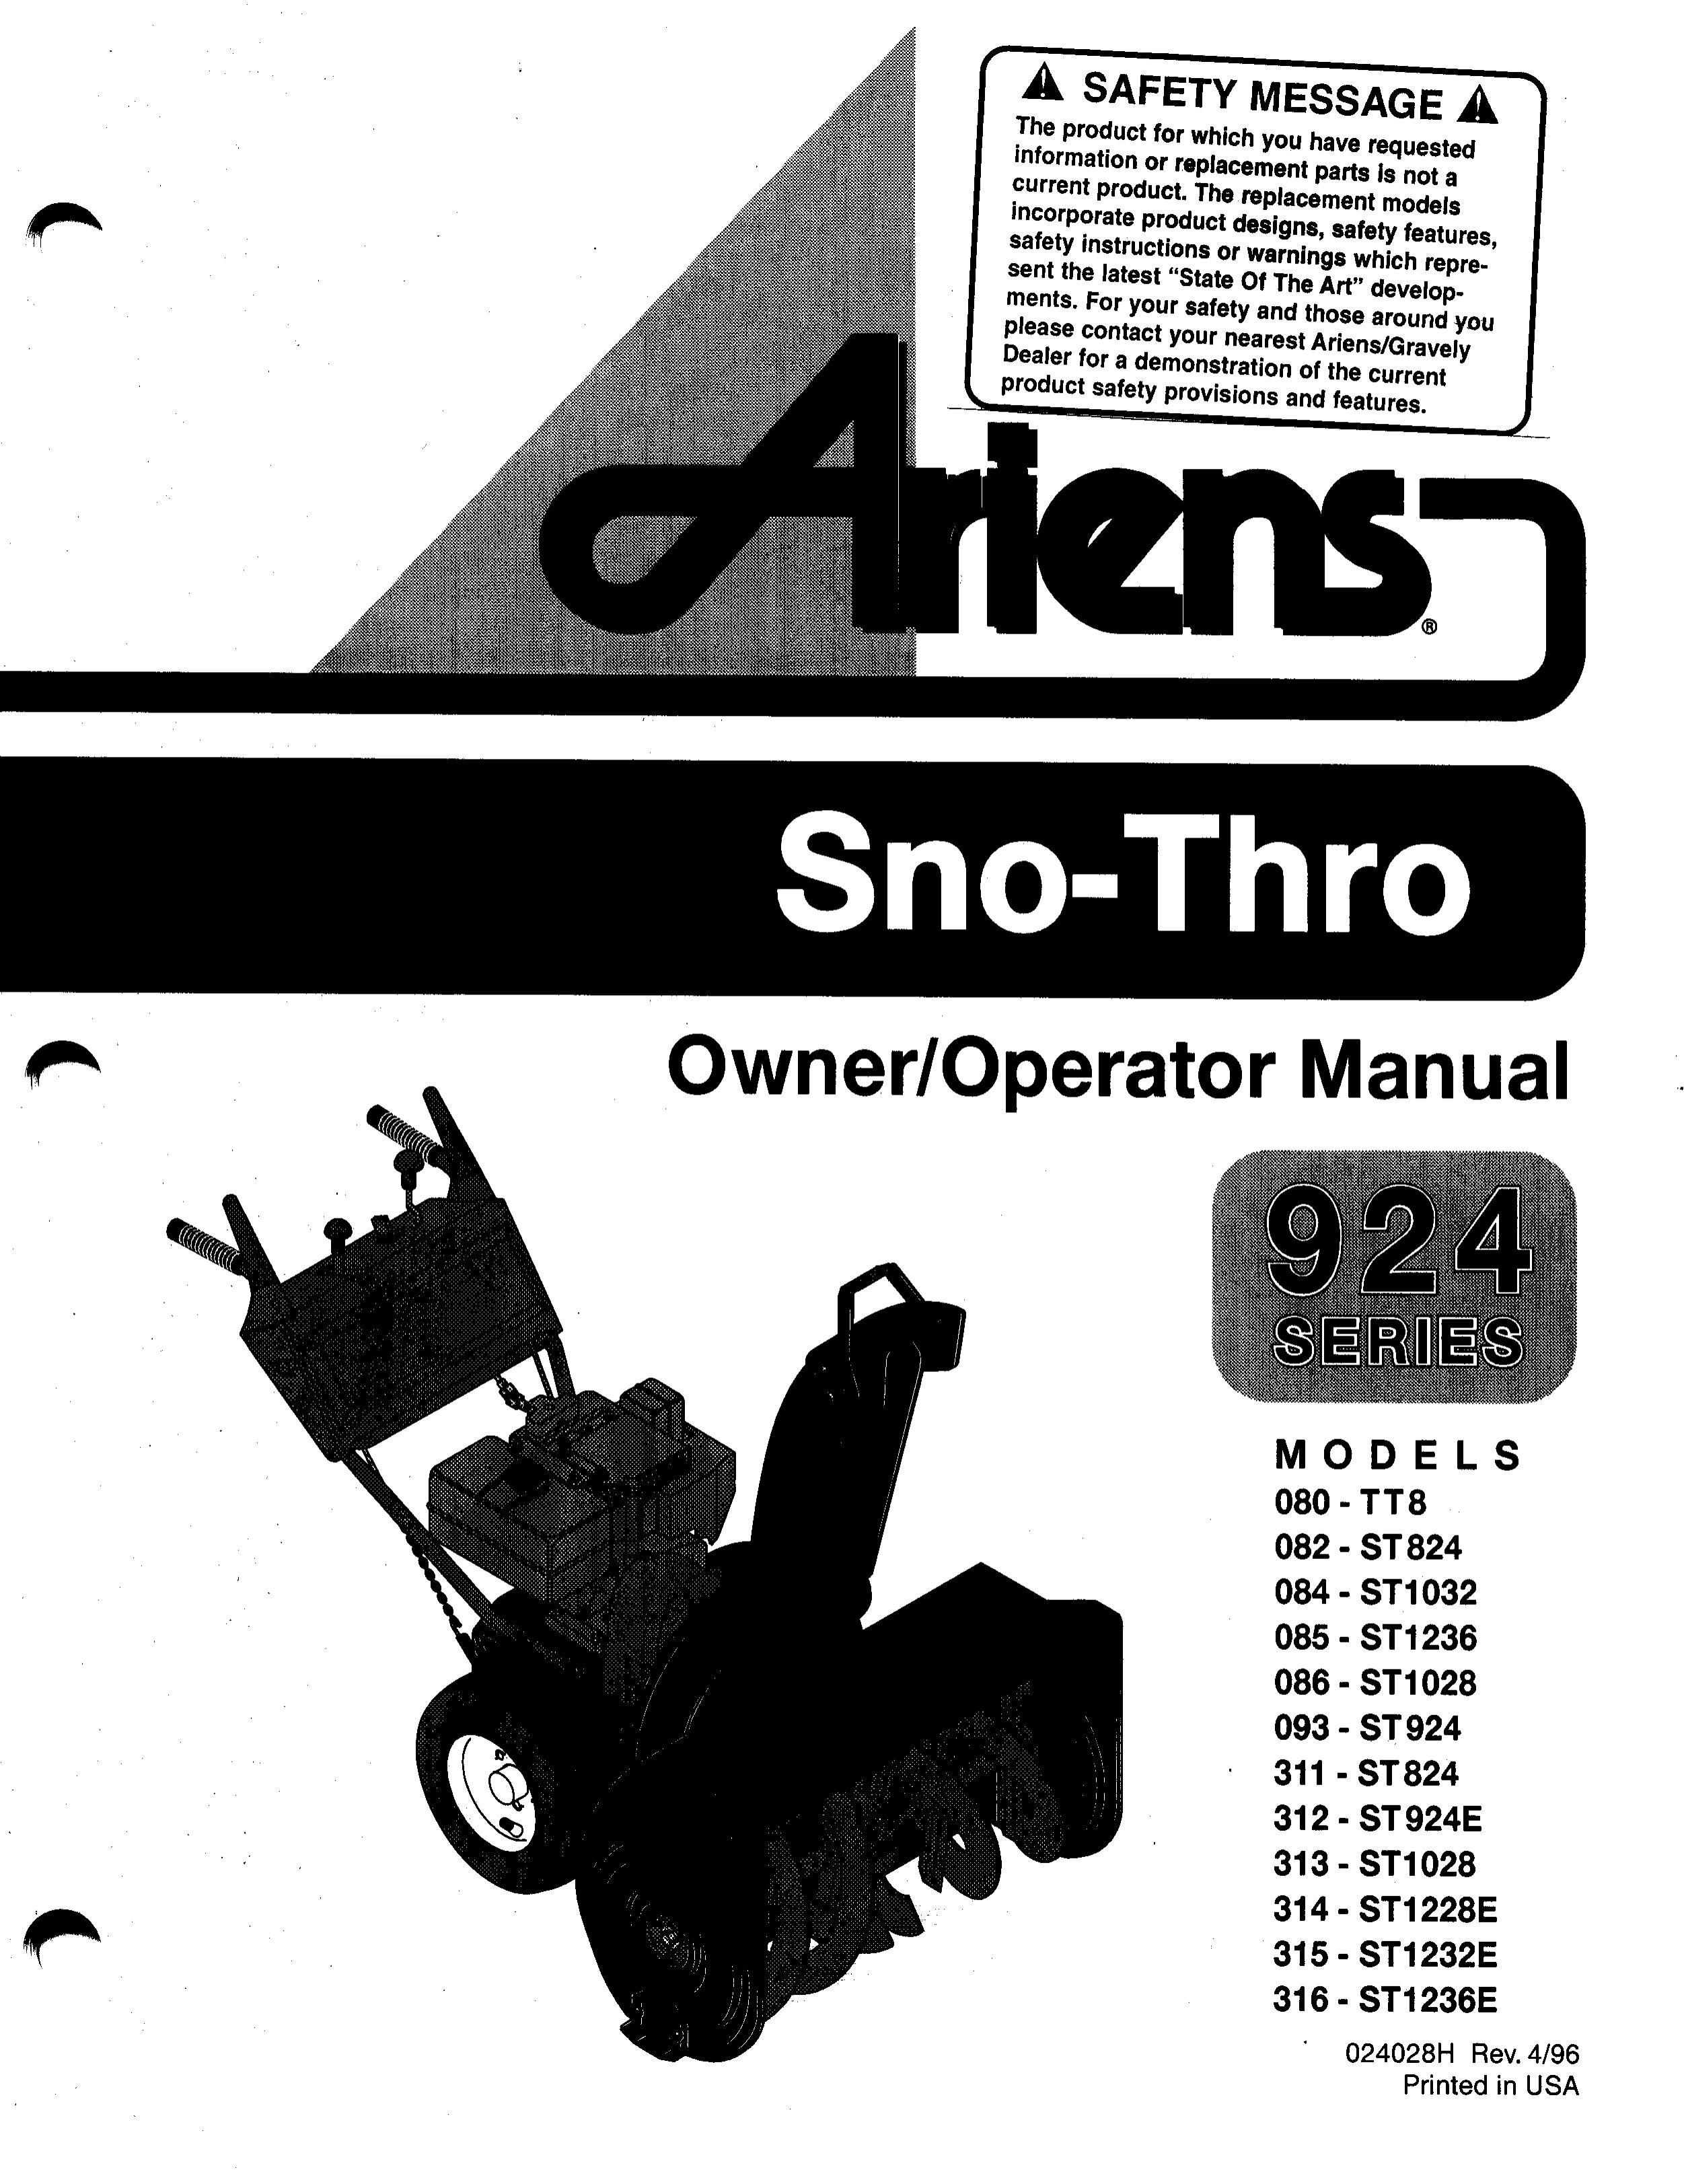 Ariens 086-ST1028 Snow Blower User Manual